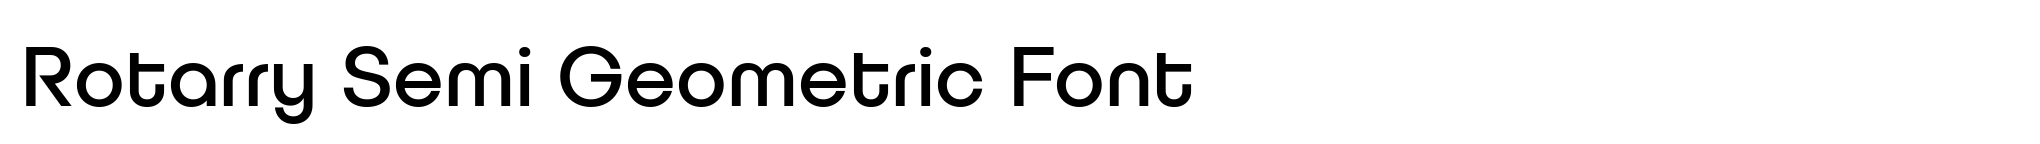 Rotarry Semi Geometric Font image